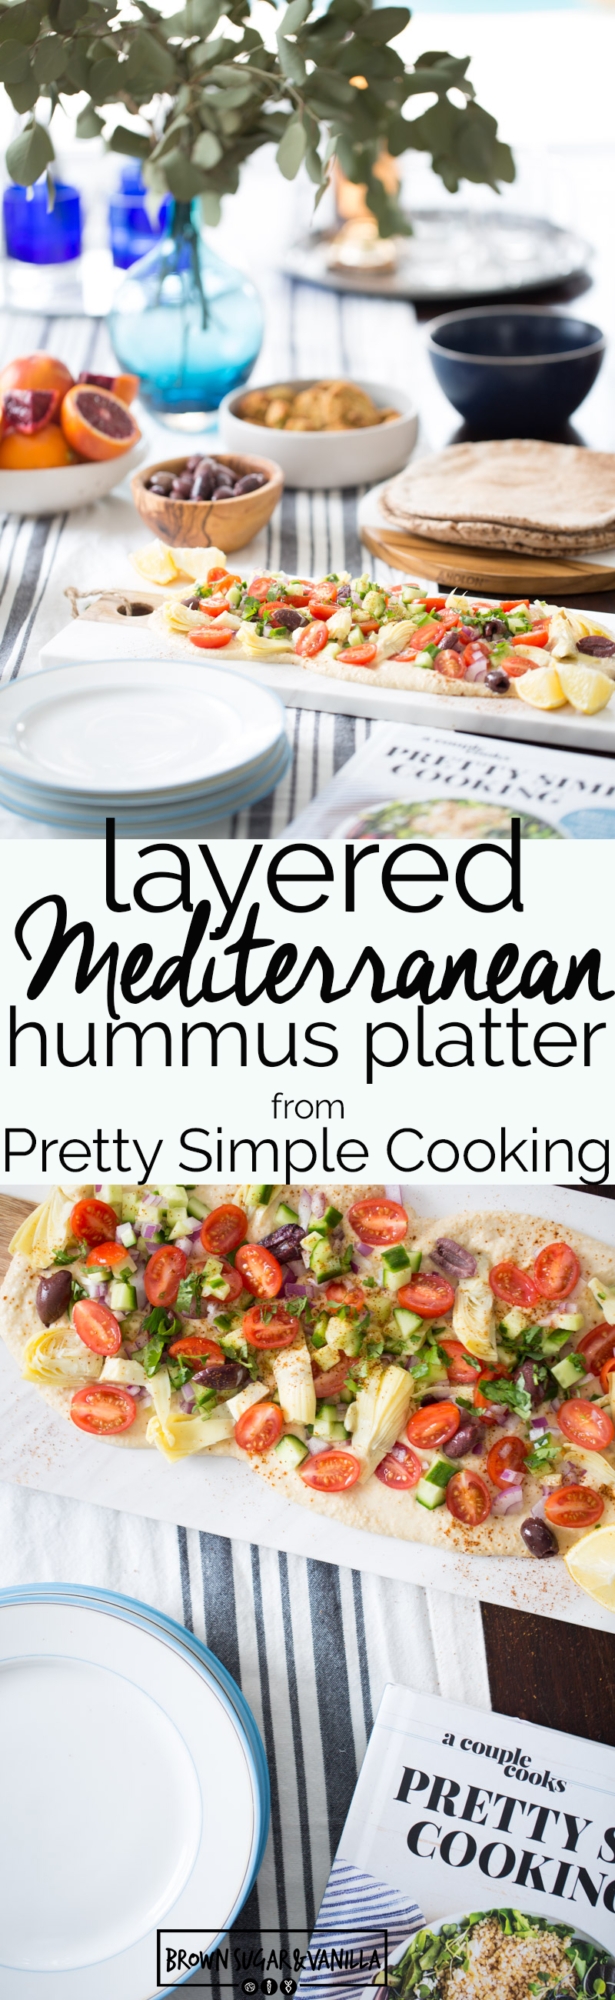 Mediteranean hummus platter